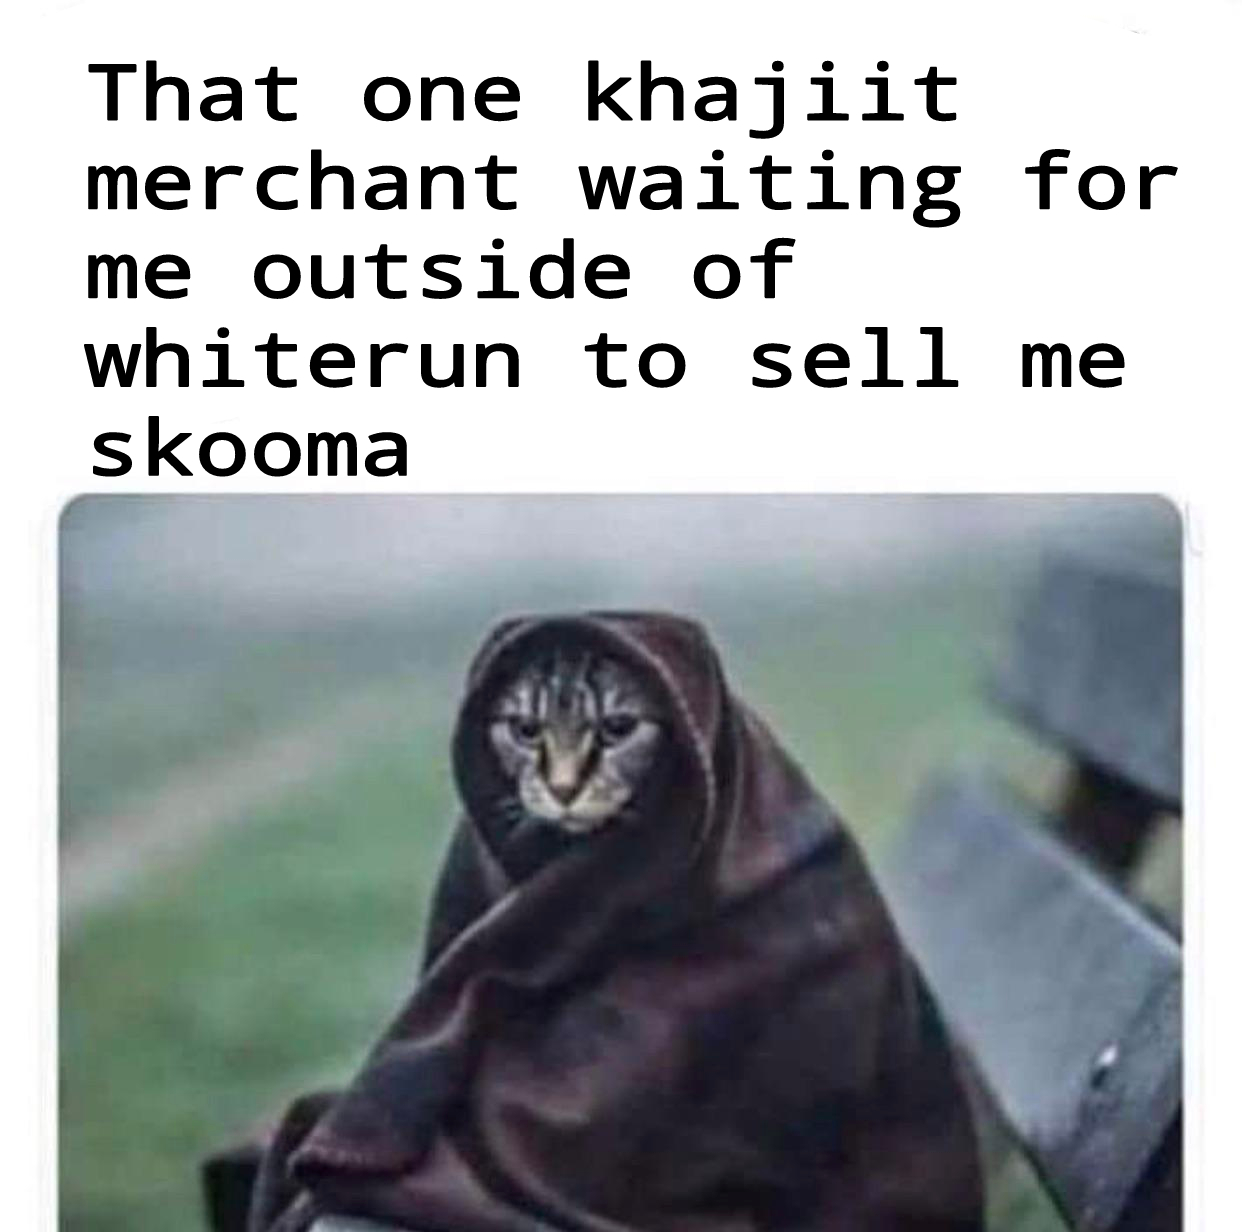 That one khajiit merchant waiting for me outside of whiterun to sell me skooma